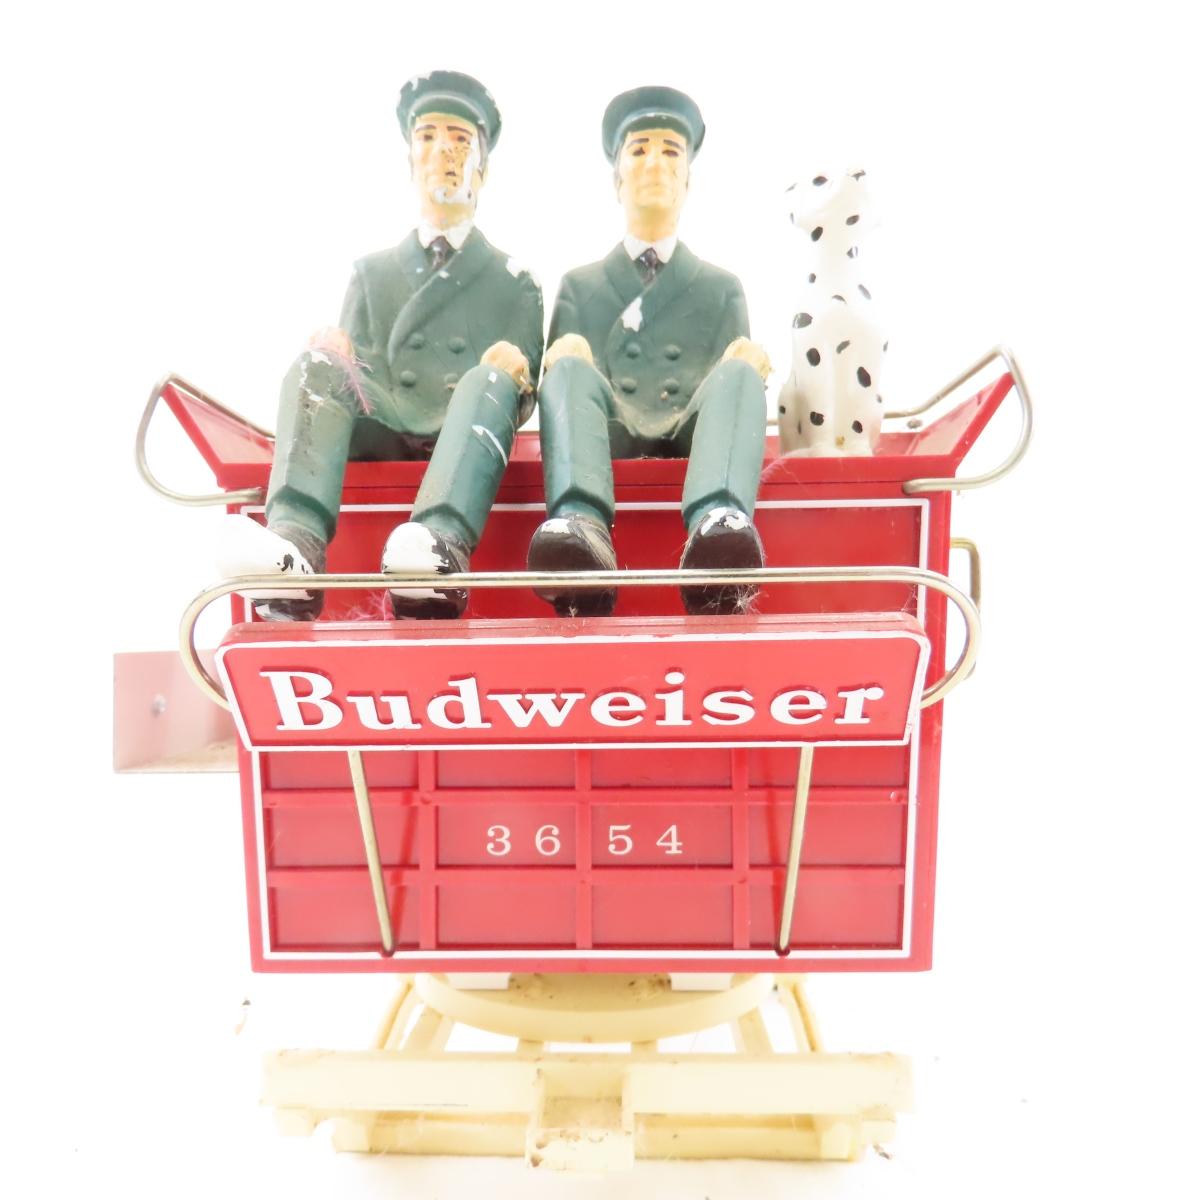 2 Vintage Budweiser Beer Wagon Models